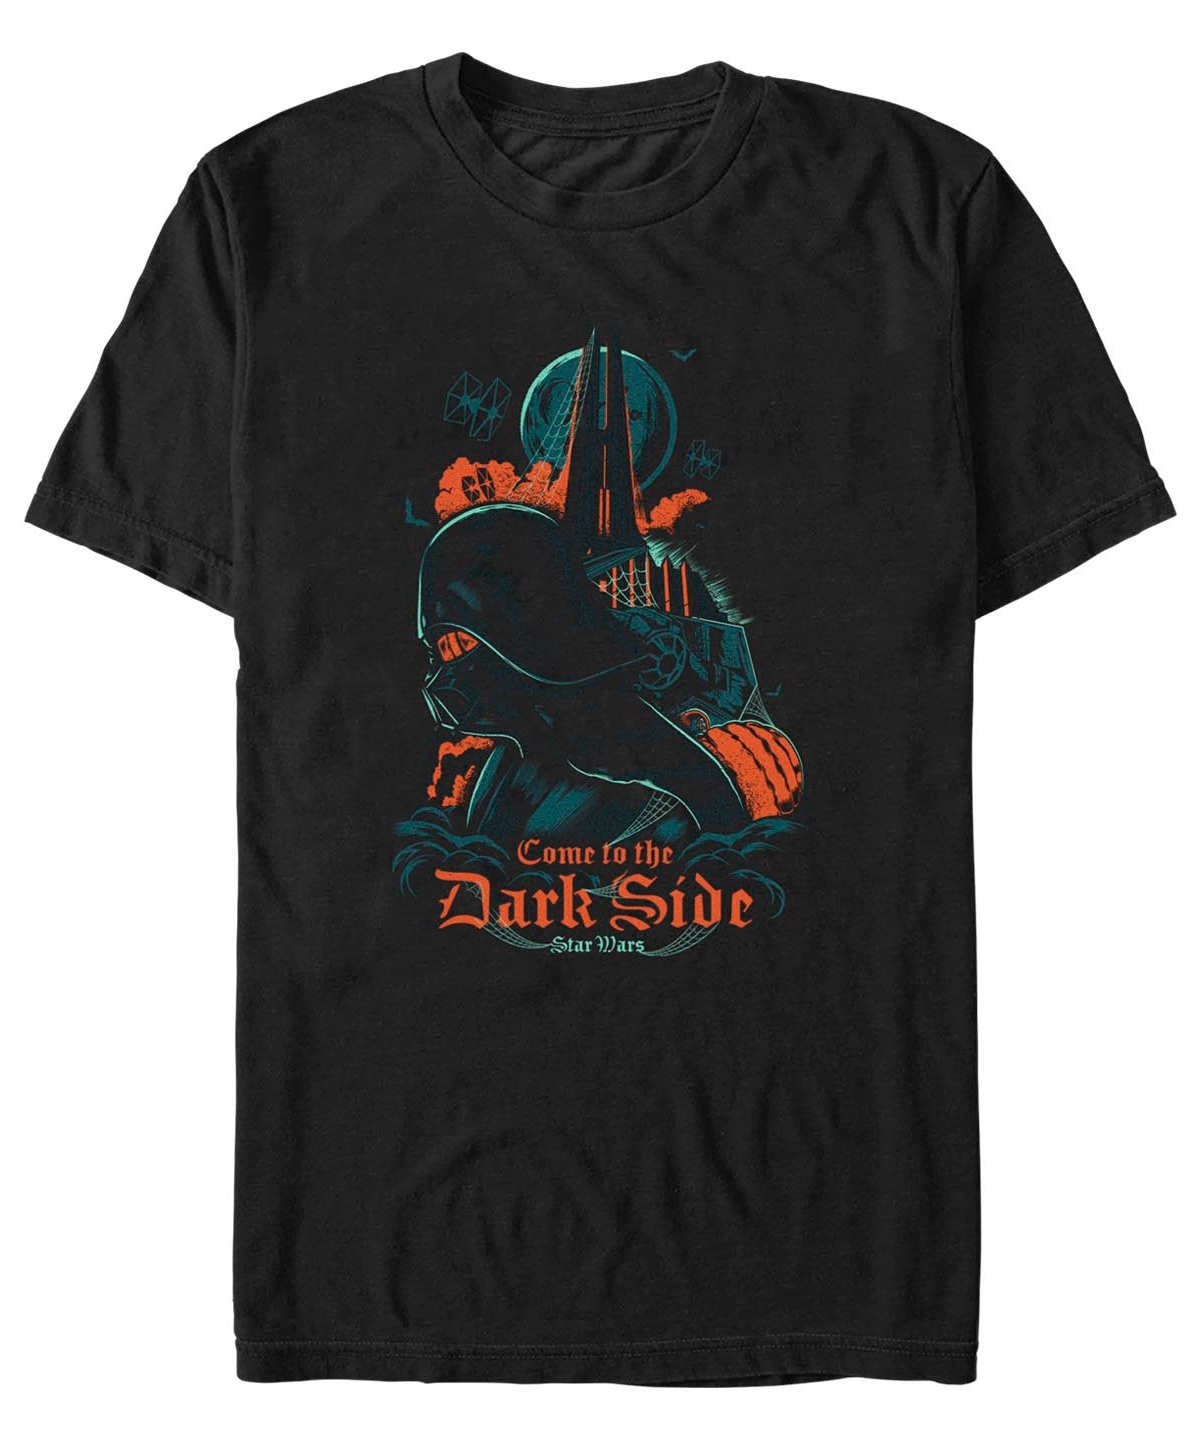 Fifth Sun Men's Star Wars The Dark Side Short Sleeves T-shirt In Black